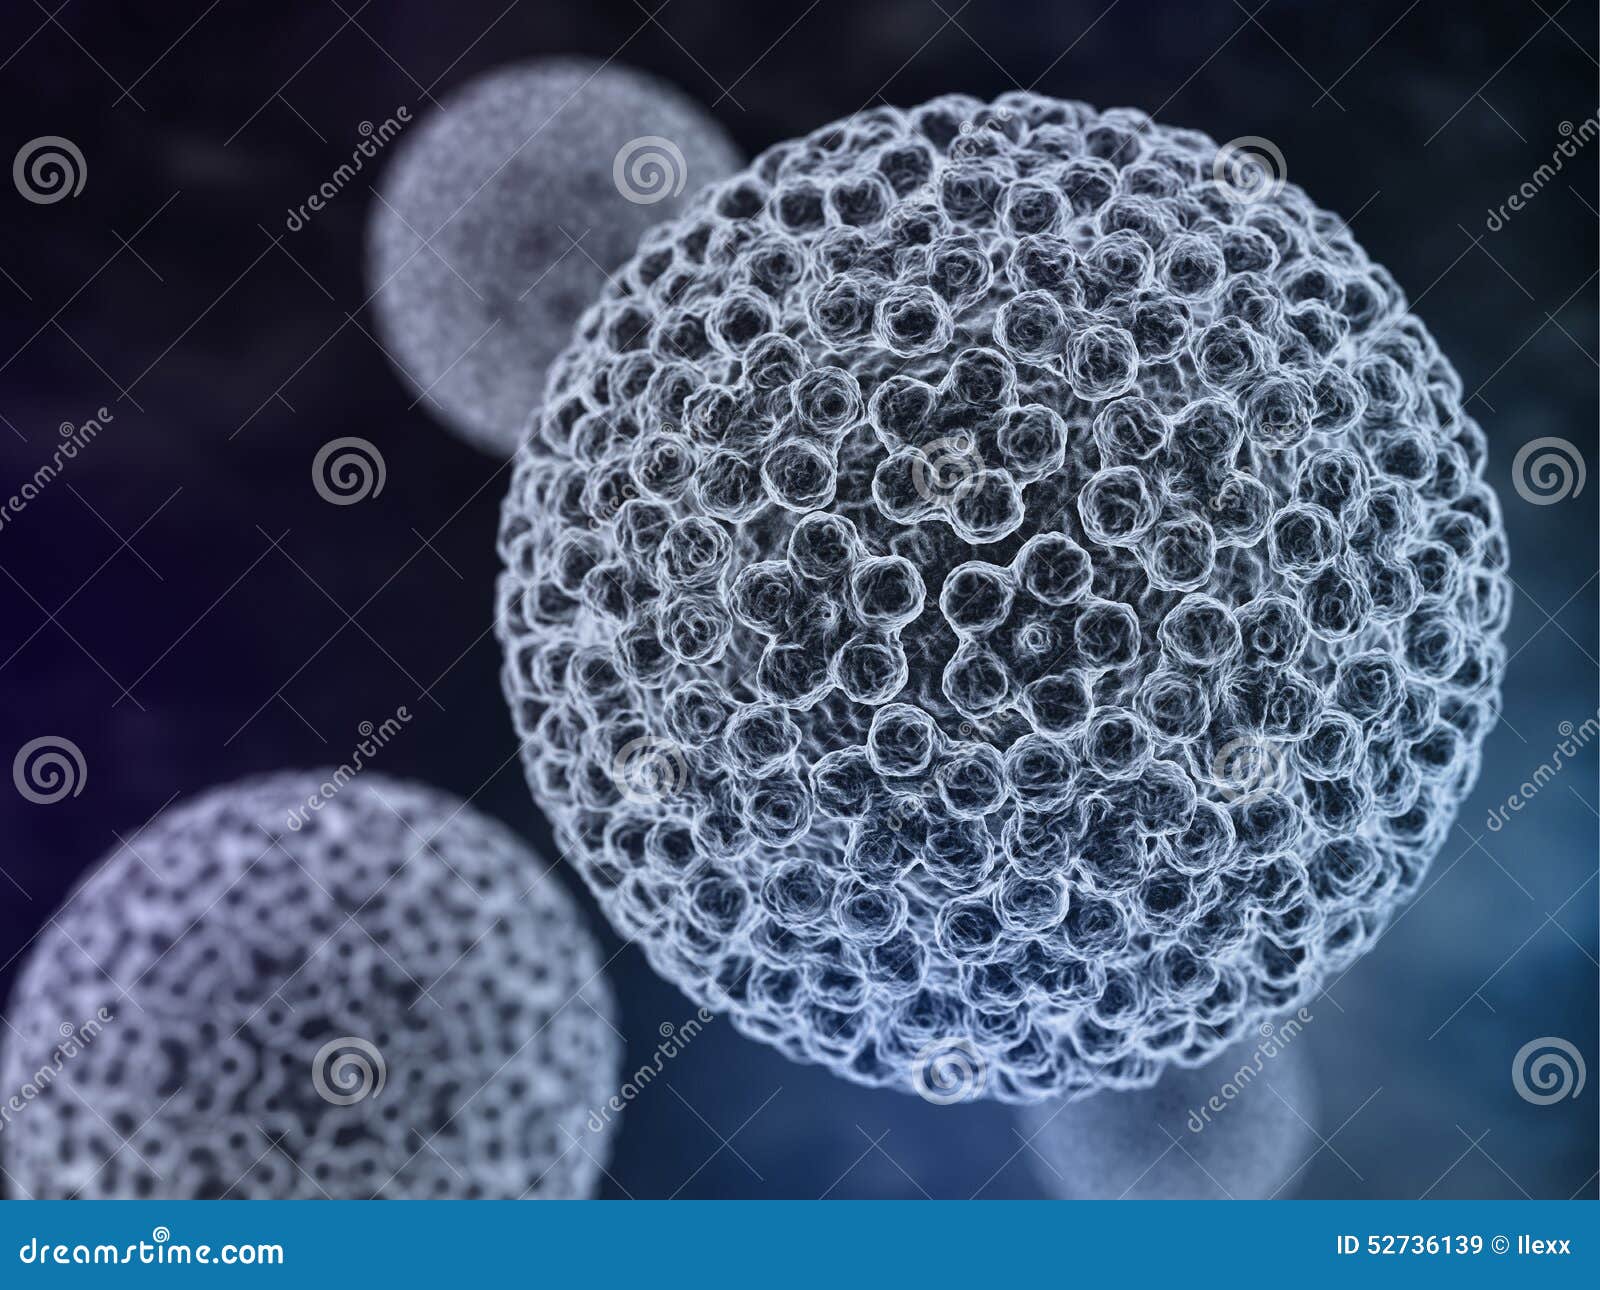 Virusul Papiloma Uman − implicaţii neonatale - Papilloma virus familia